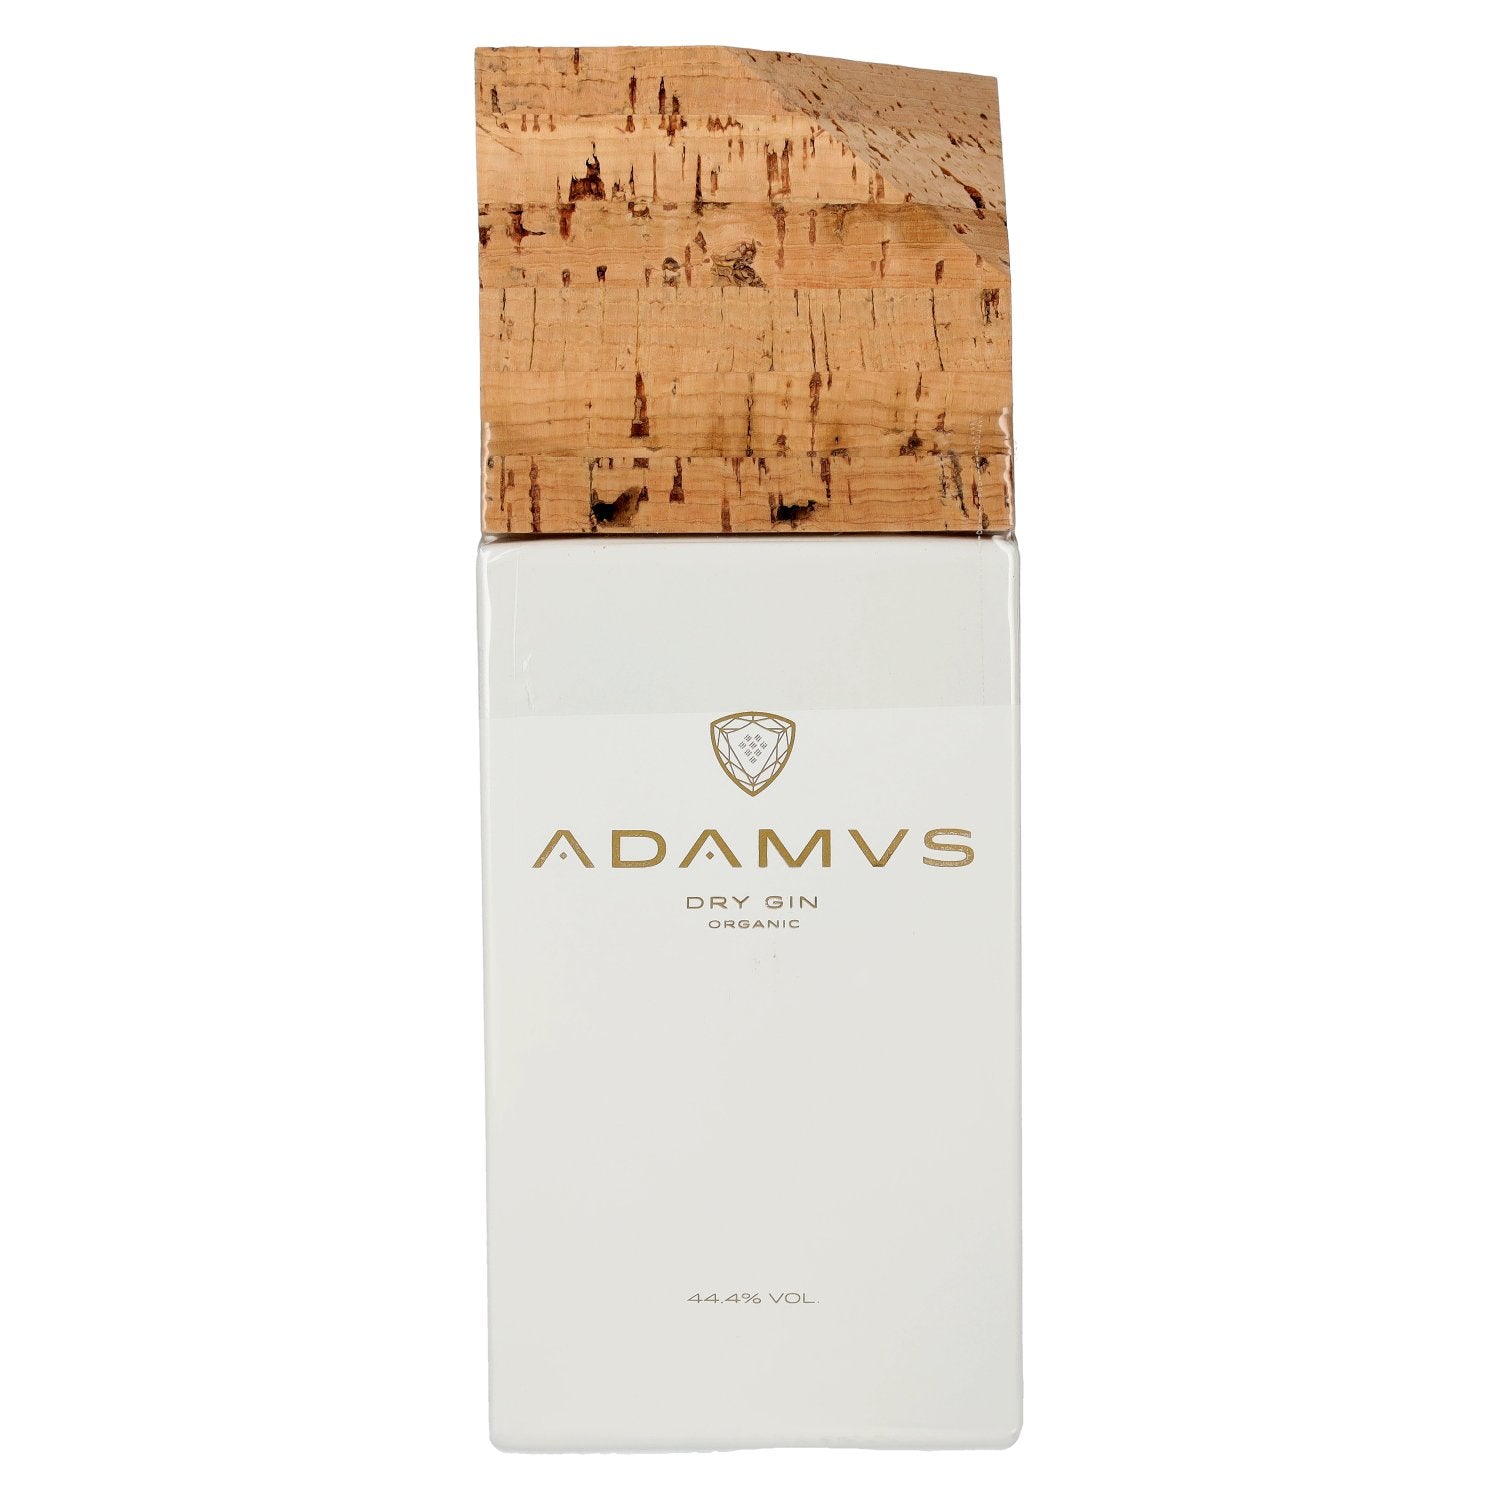 Adamus Dry Gin Organic 44,4% Vol. 0,7l